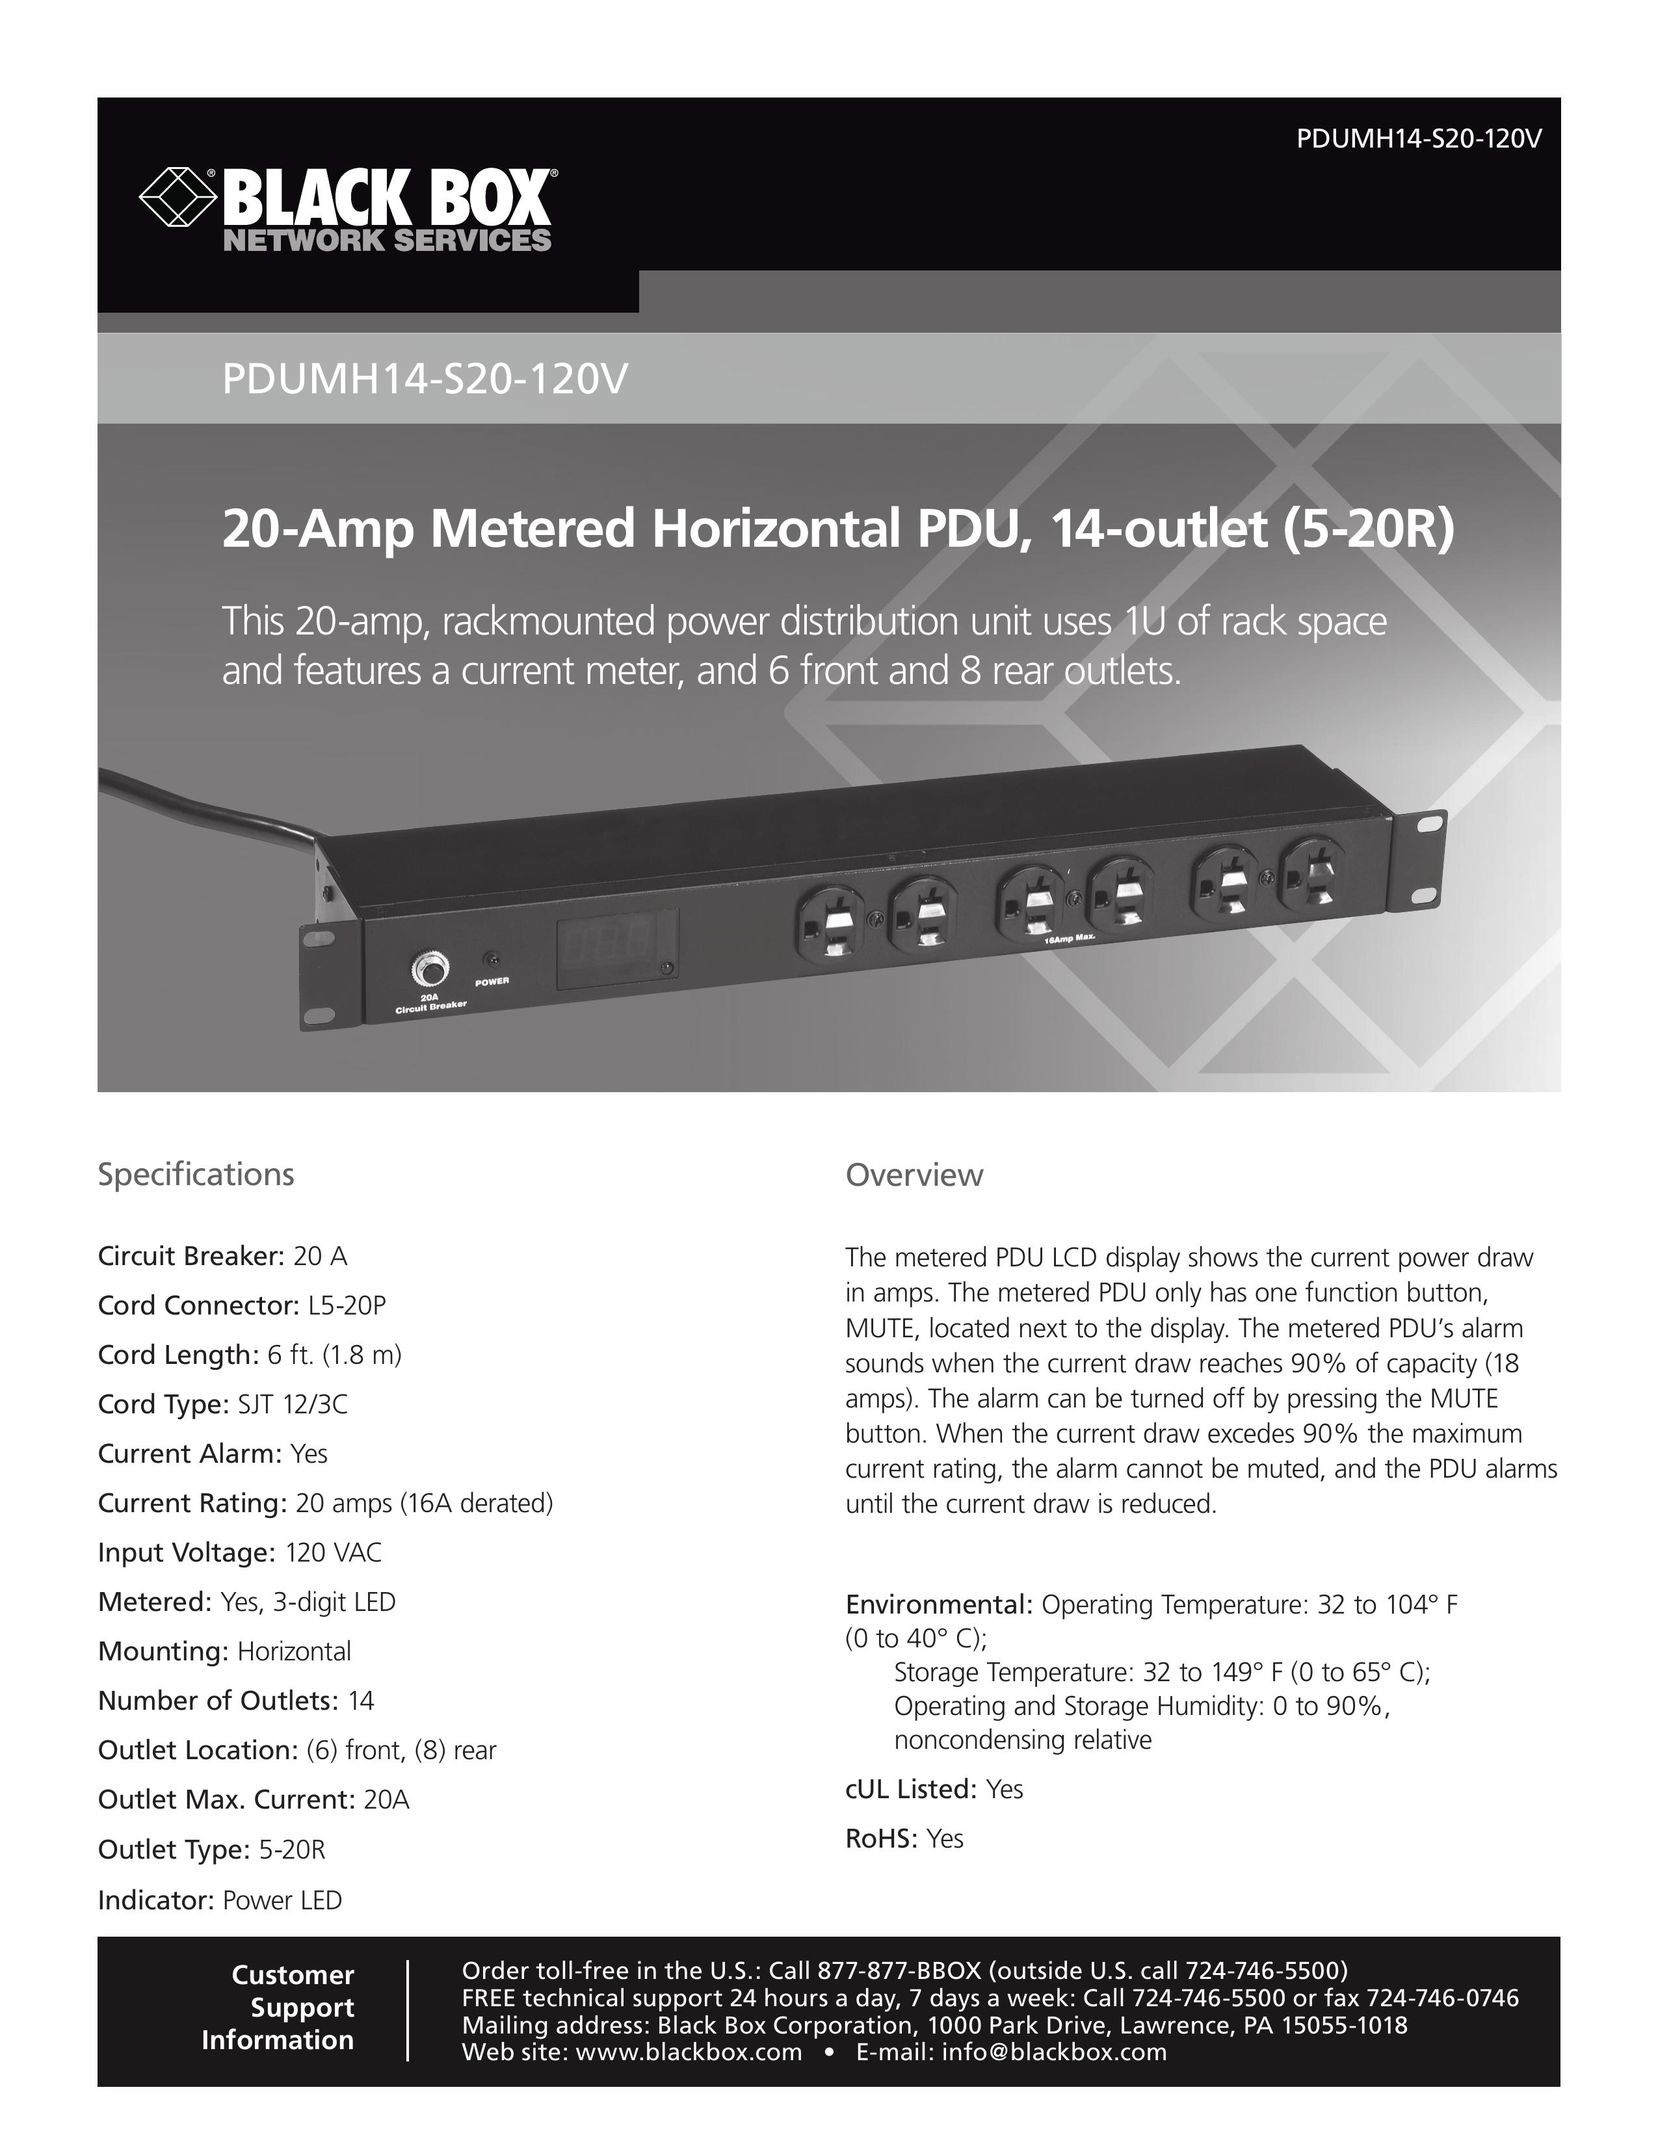 Black Box PDUMH14-S20-120V Power Supply User Manual